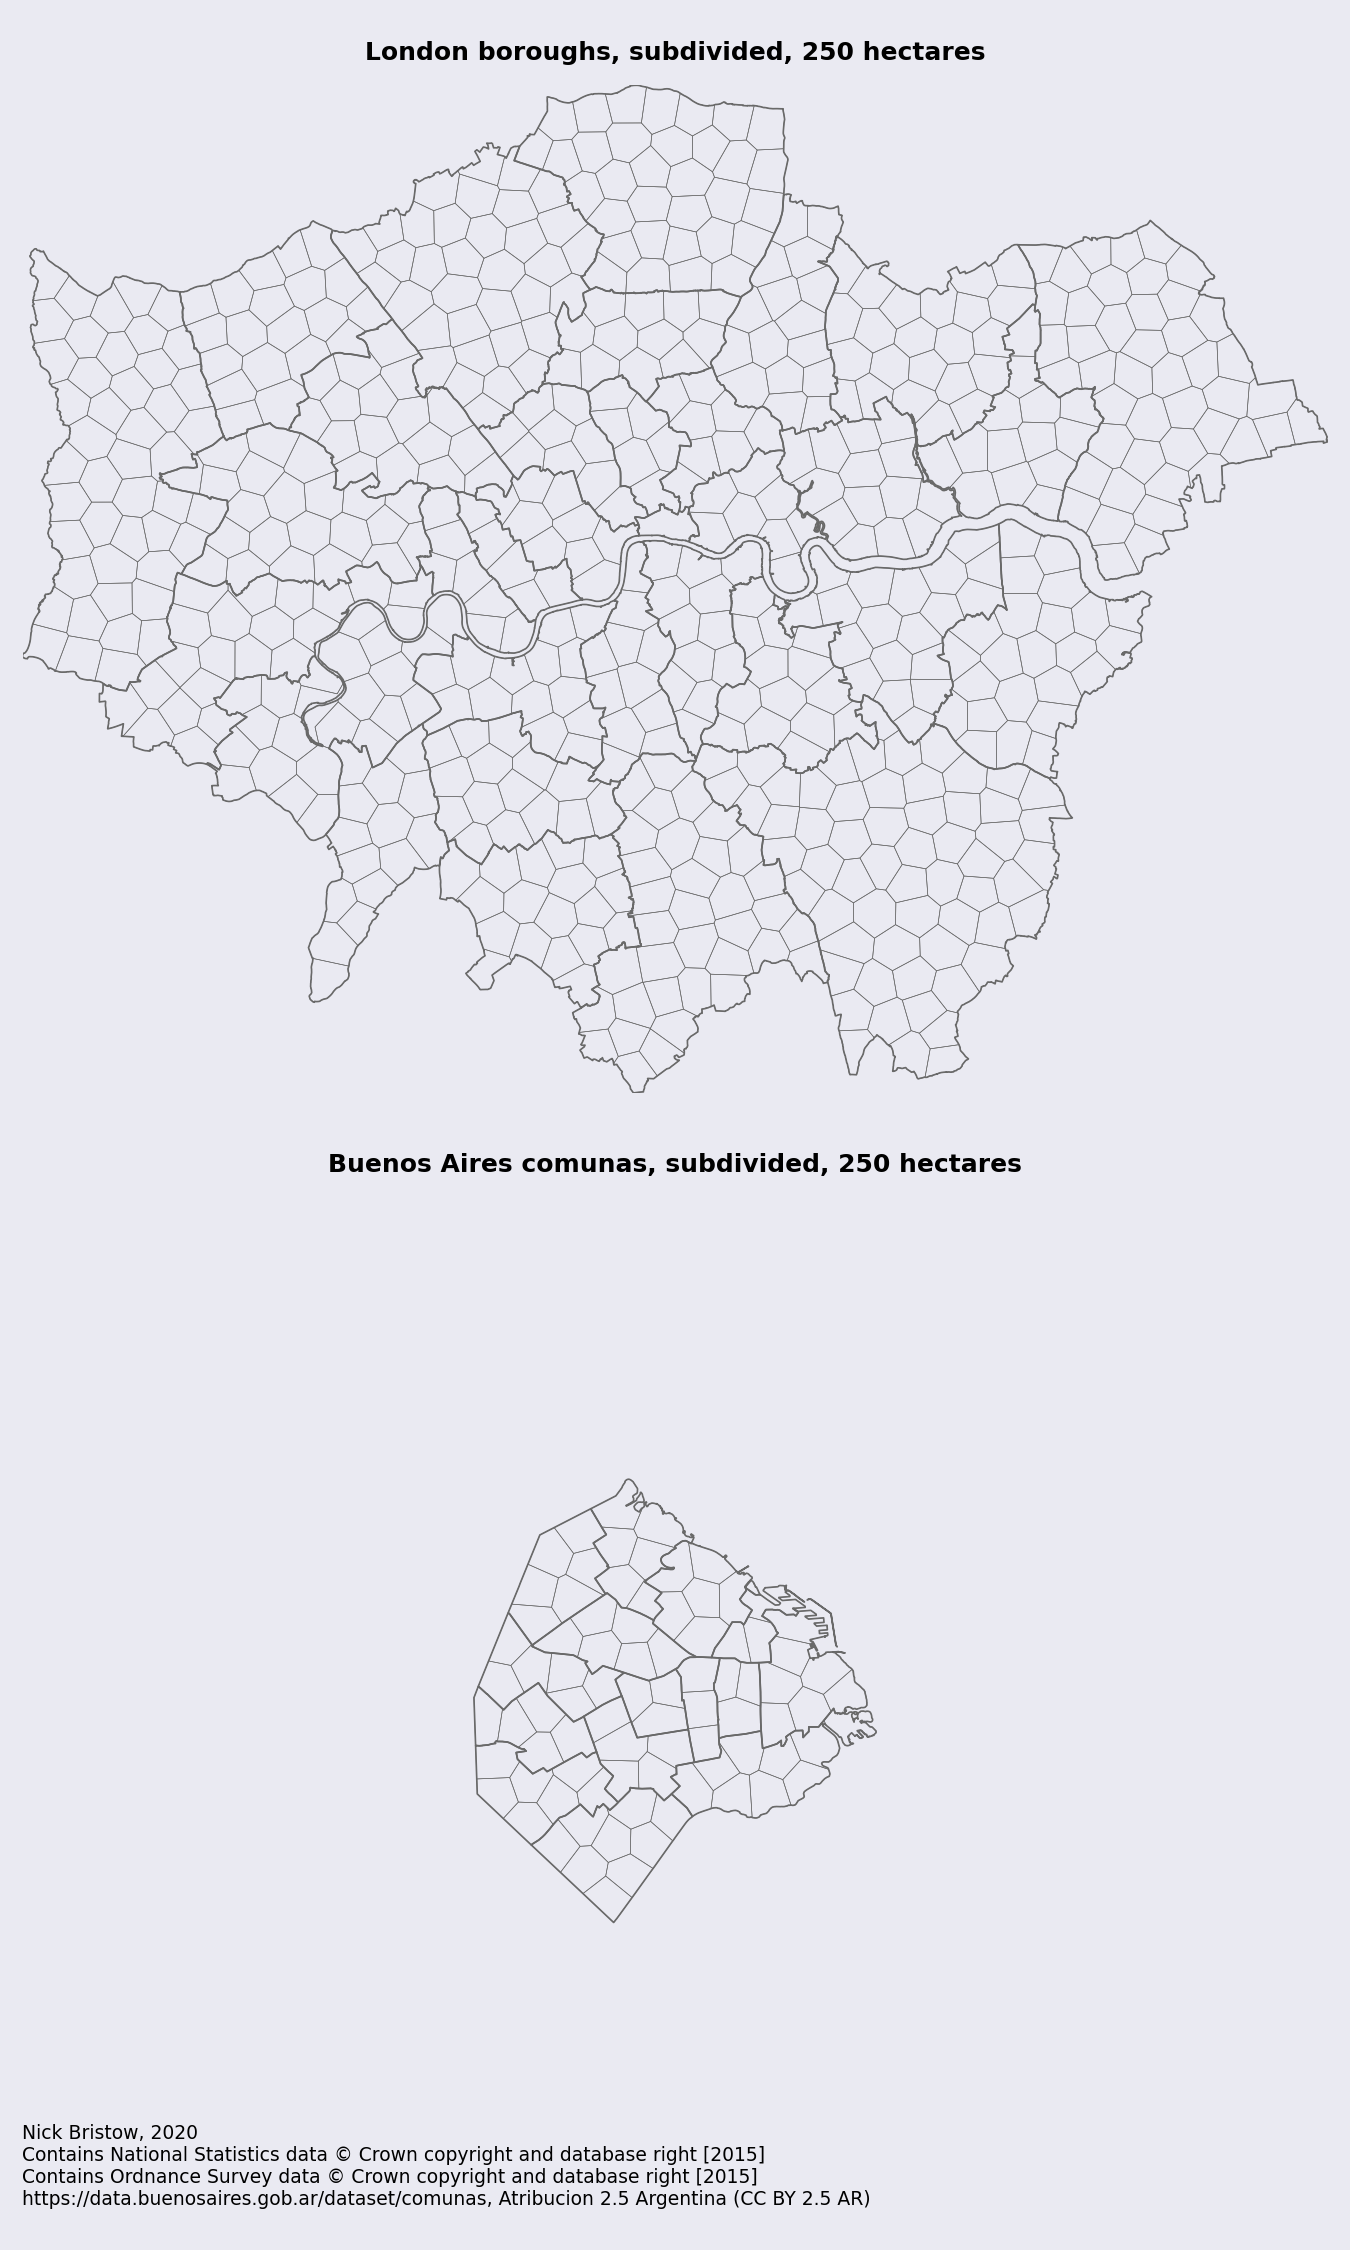 Greater London boroughs, Ciudad Autónoma de Buenos Aires comunas subdivided